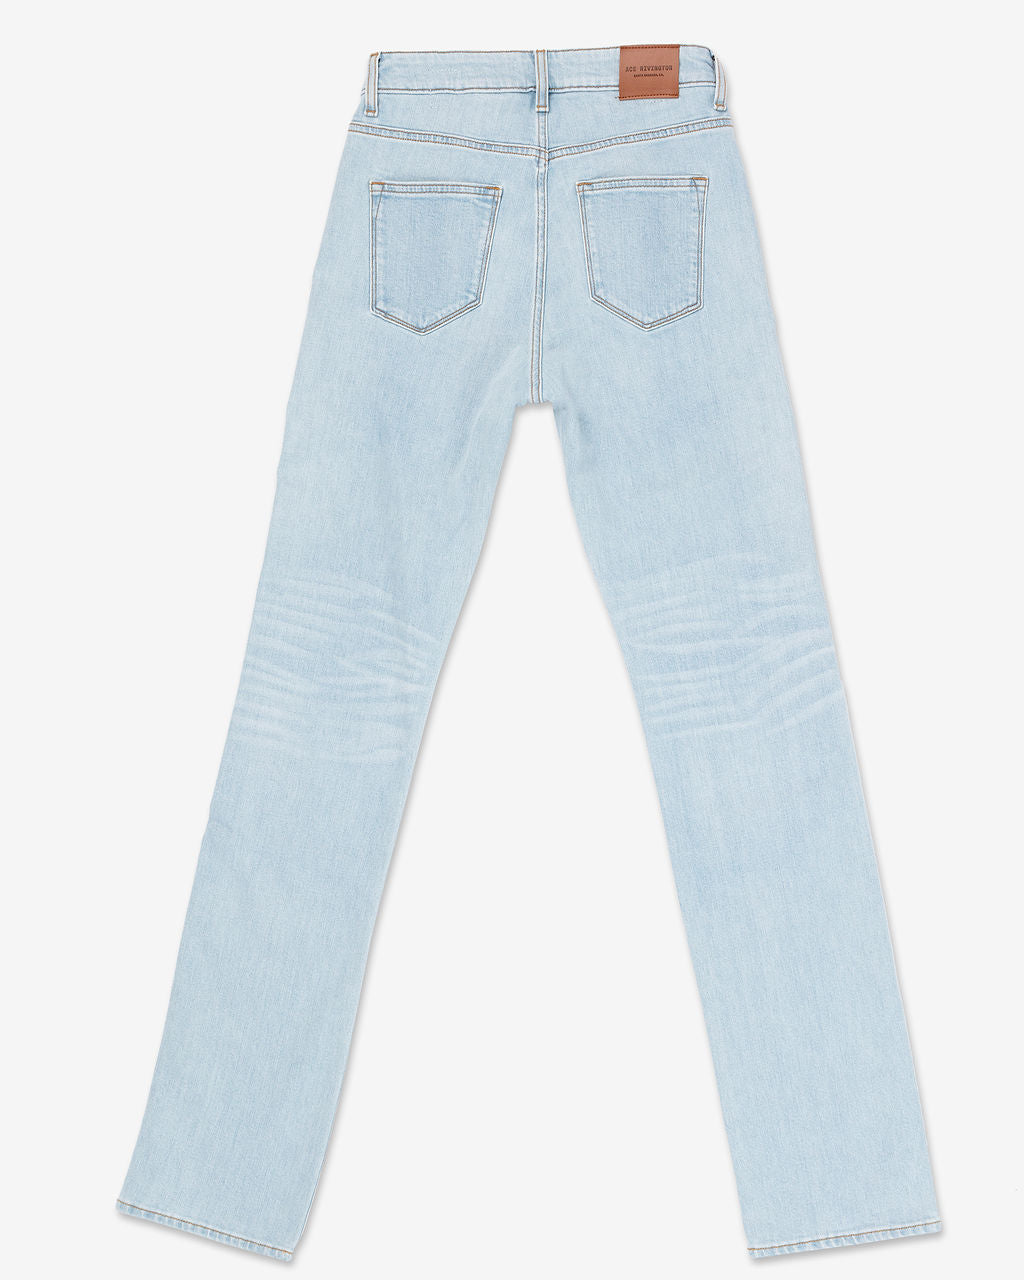 Women's Classic Straight Comfort Denim Jeans - Super Light